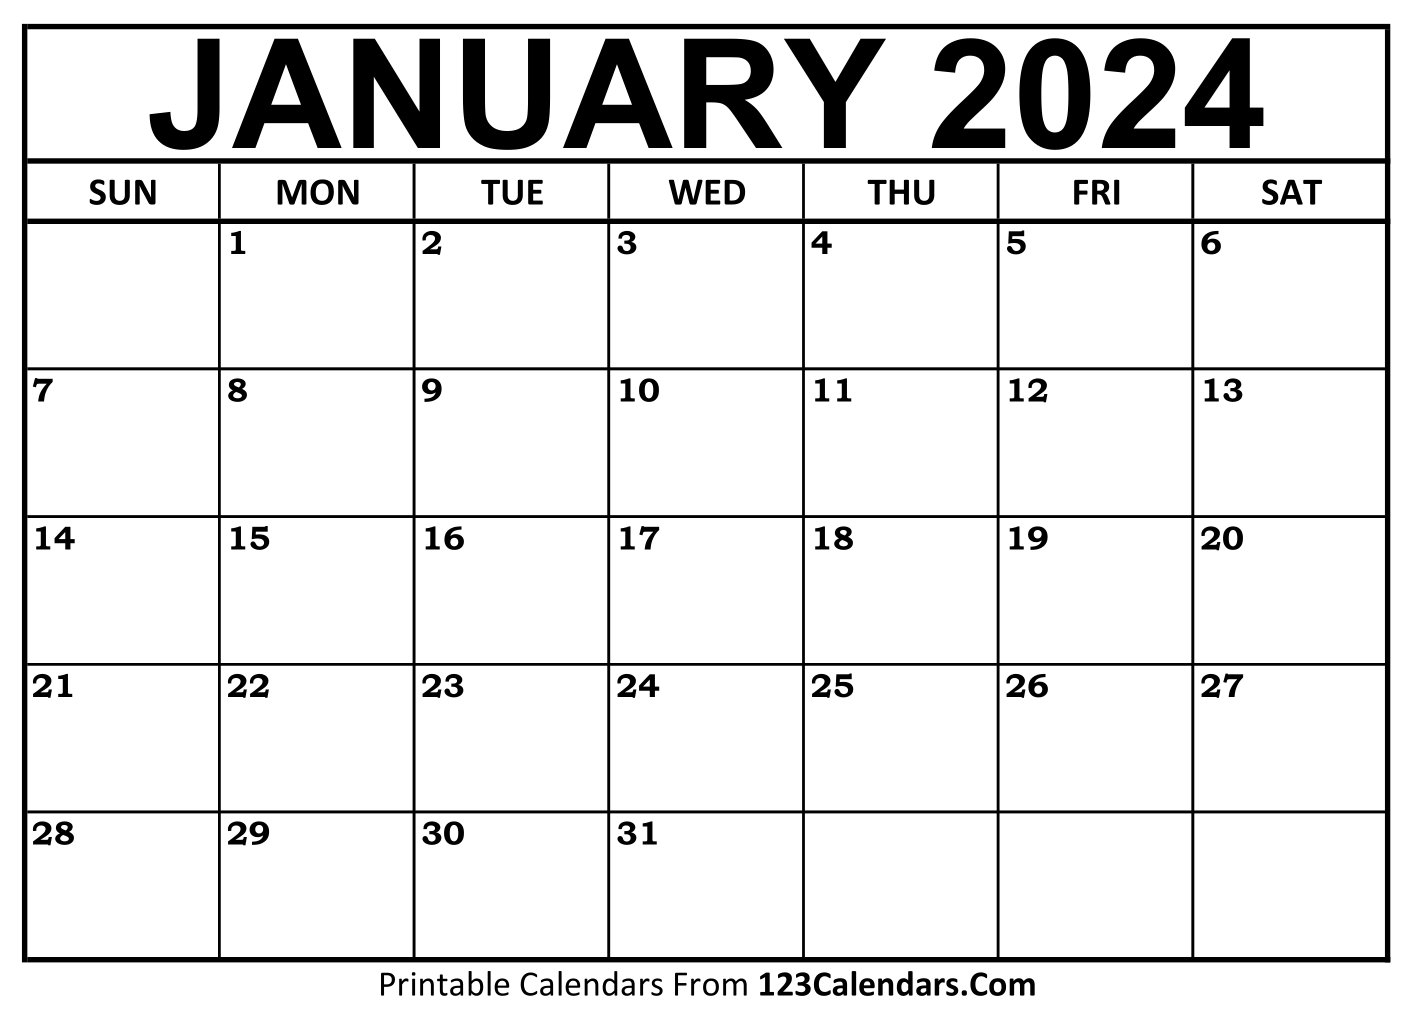 Printable January 2024 Calendar Templates - 123Calendars for January 2024 Calendar Template Printable